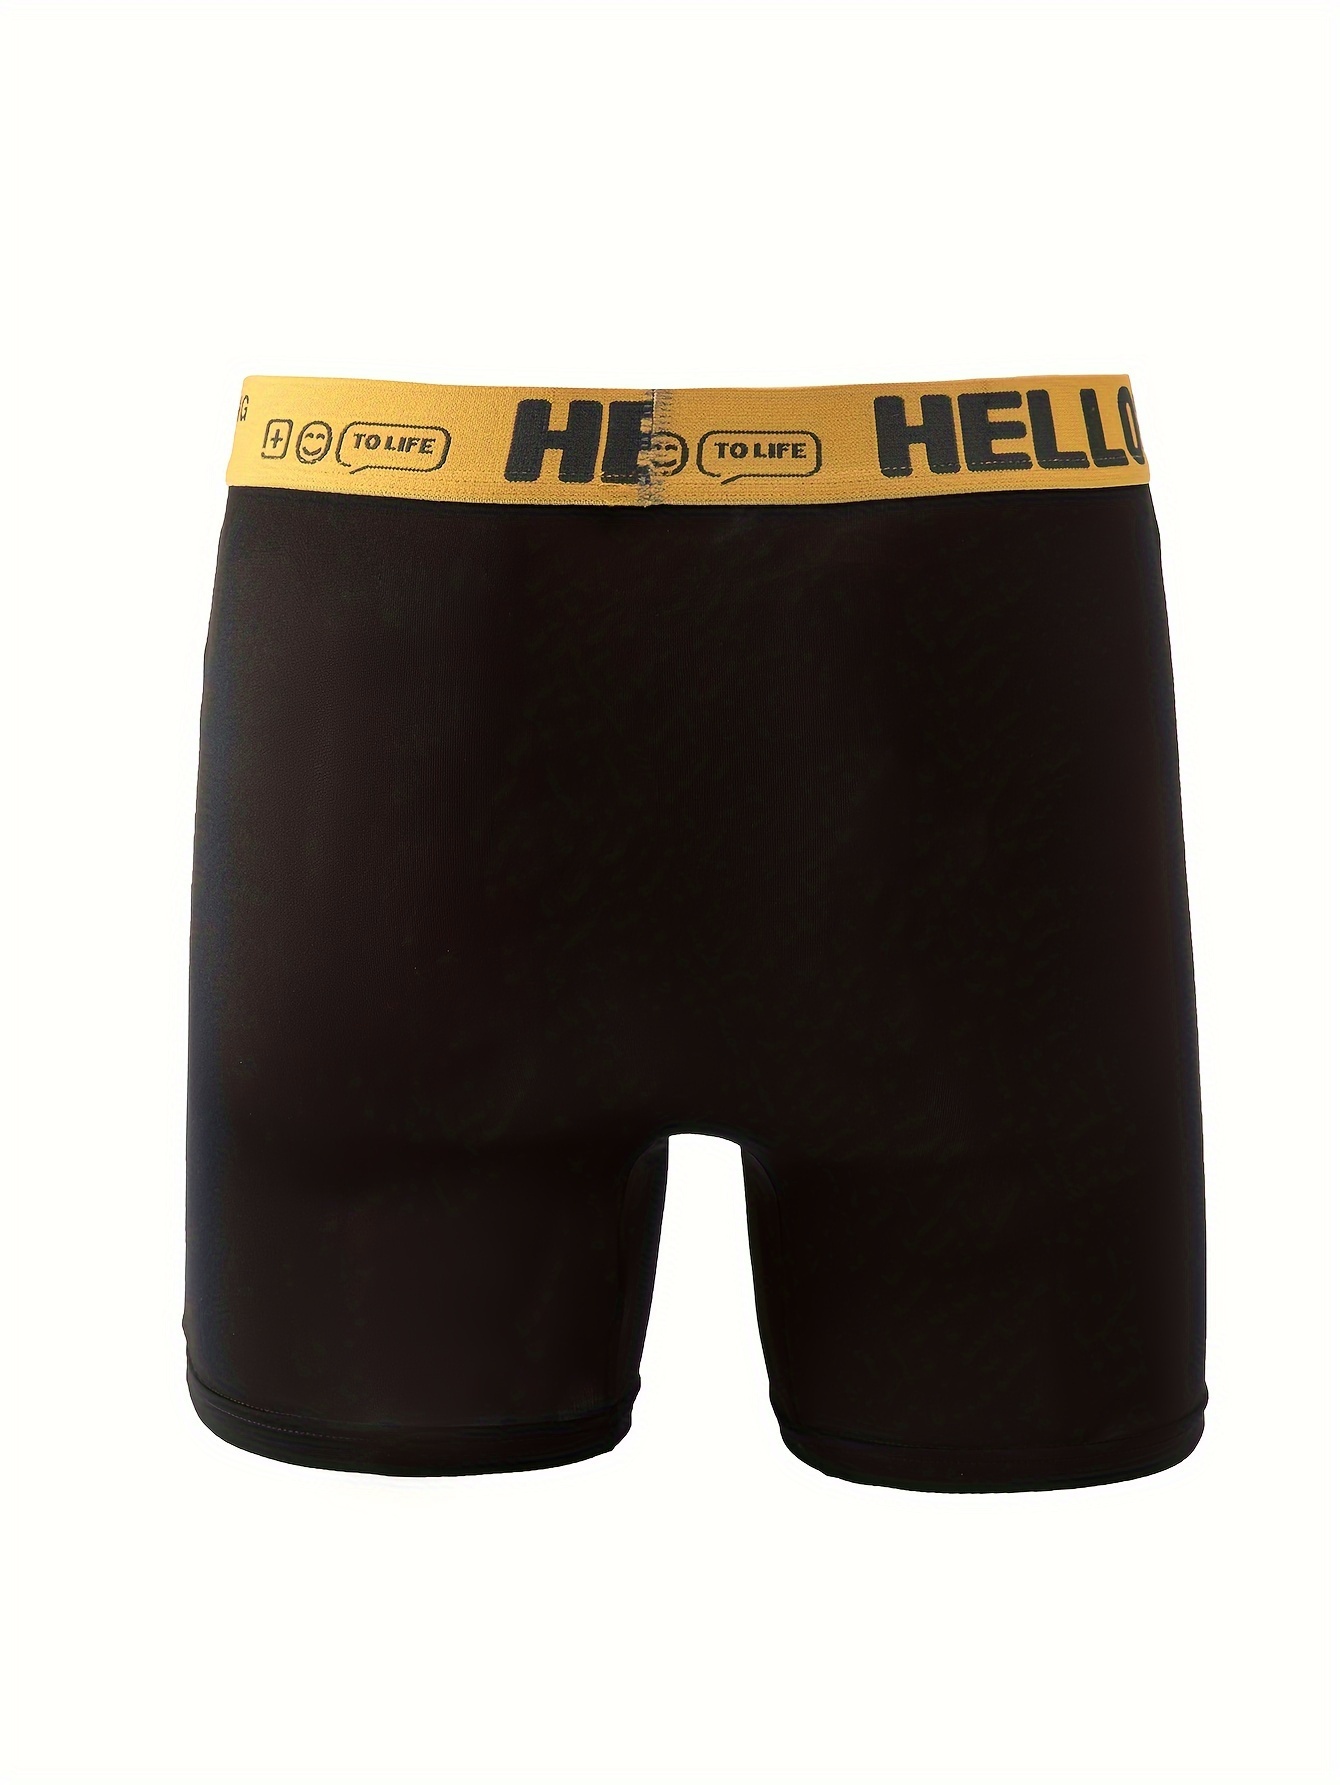 3pcs mens boxer briefs sightly stretch breathable comfortable sport underwear details 12